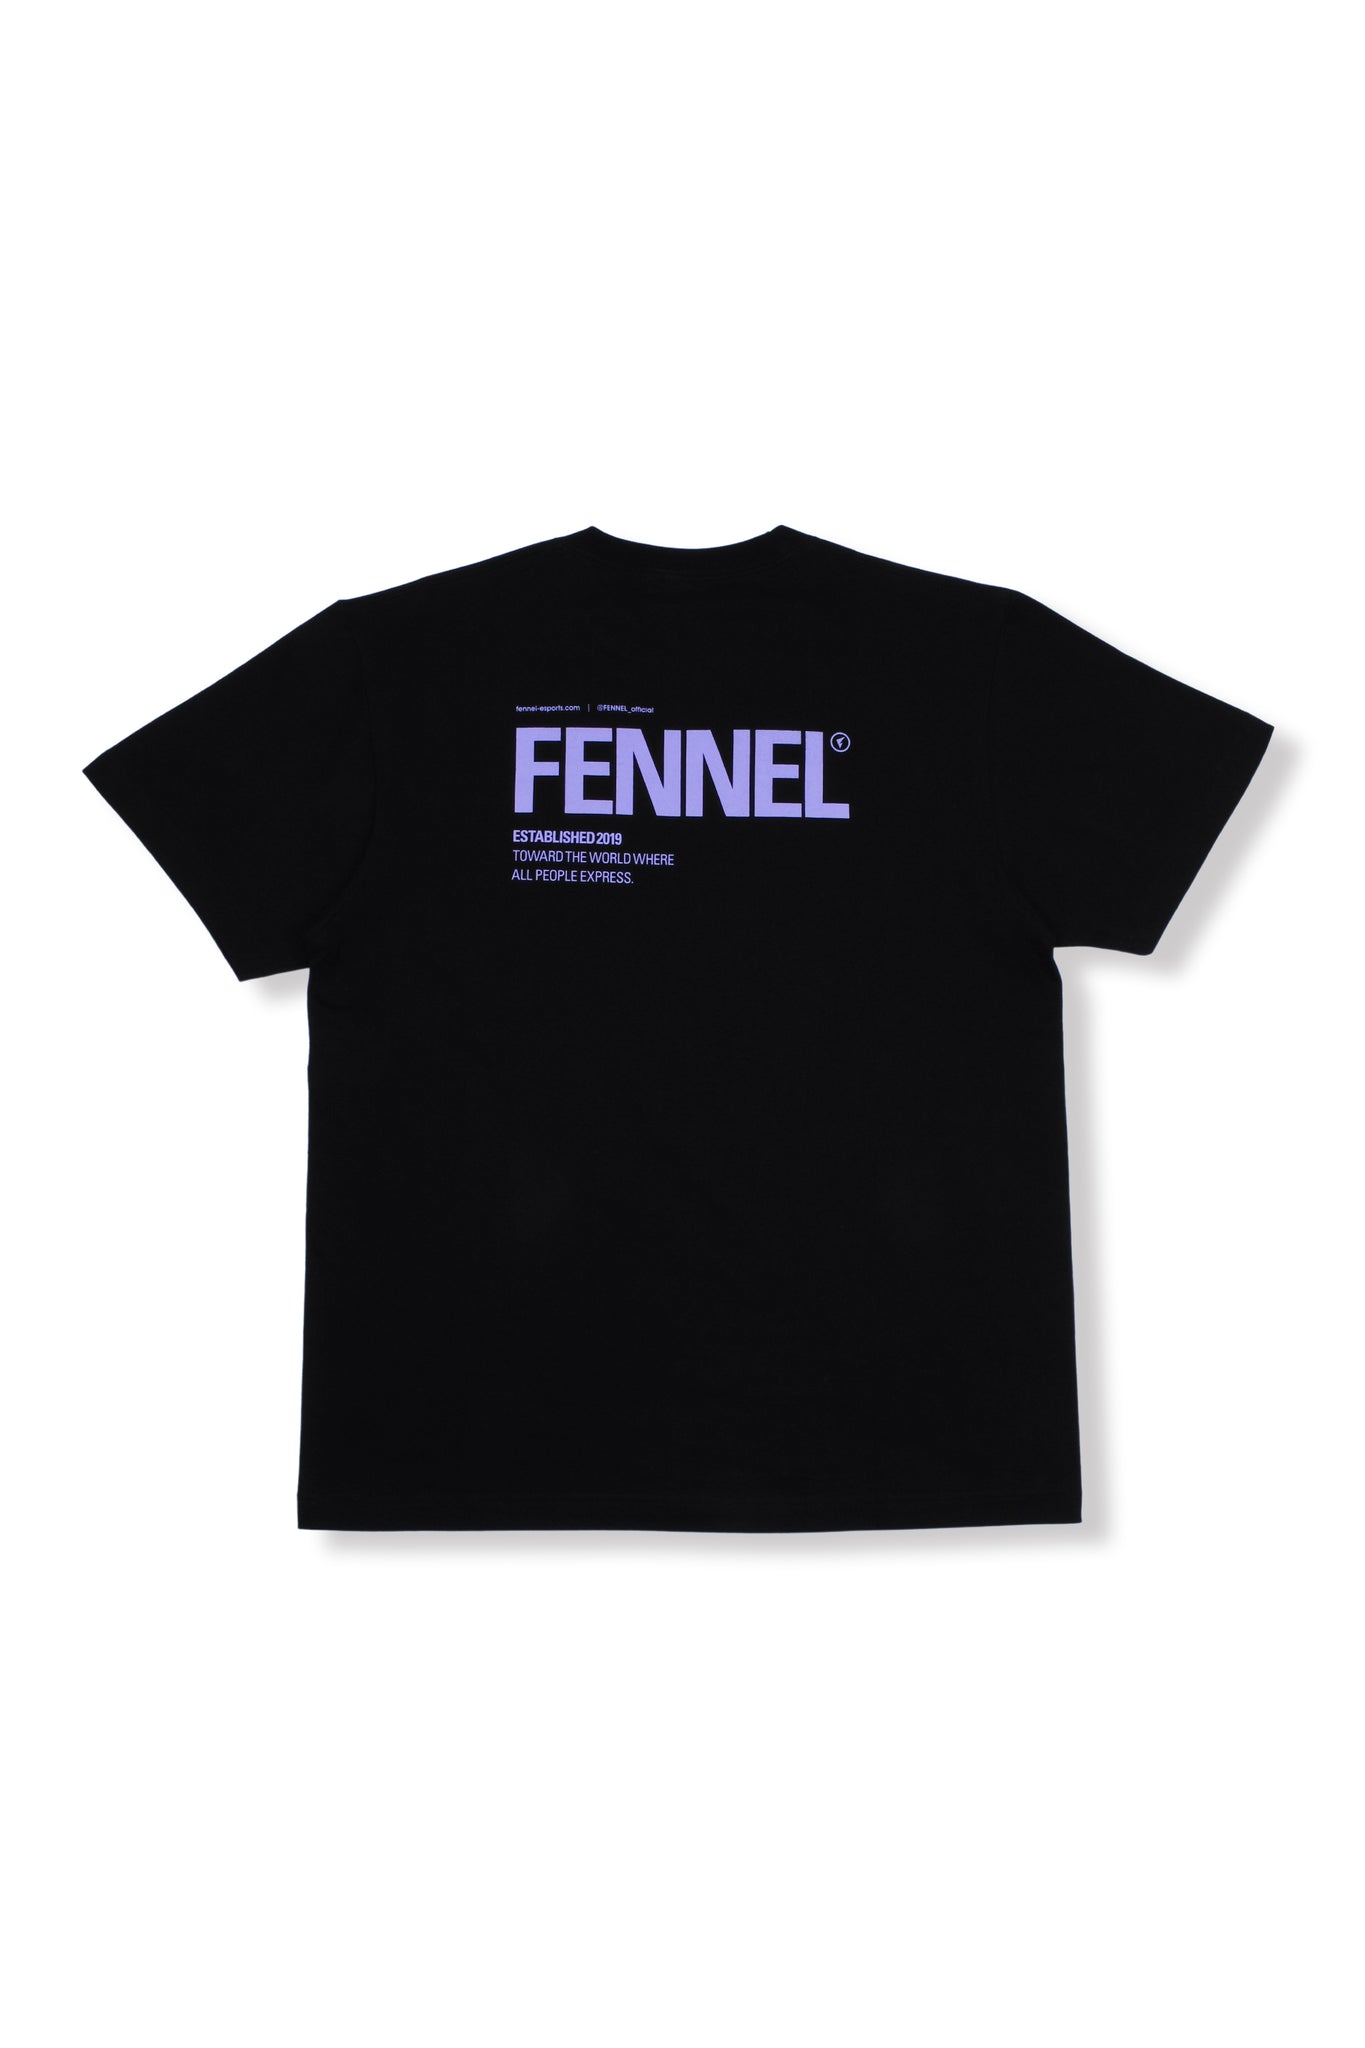 FENNEL STANDARD T-SHIRT BLACK/PURPLE